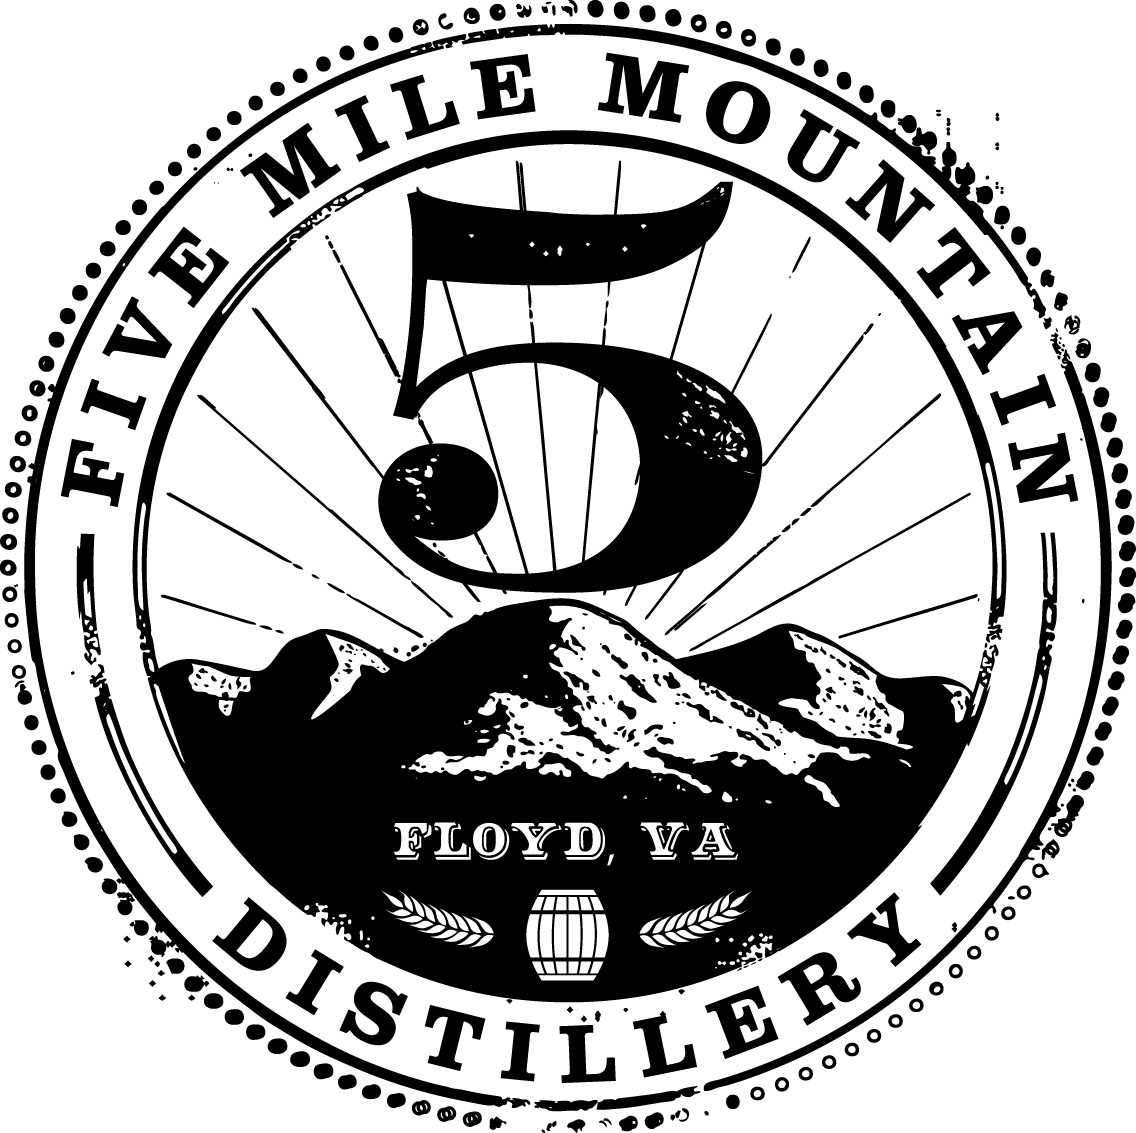 5 Mile Mountain Distillery Photo